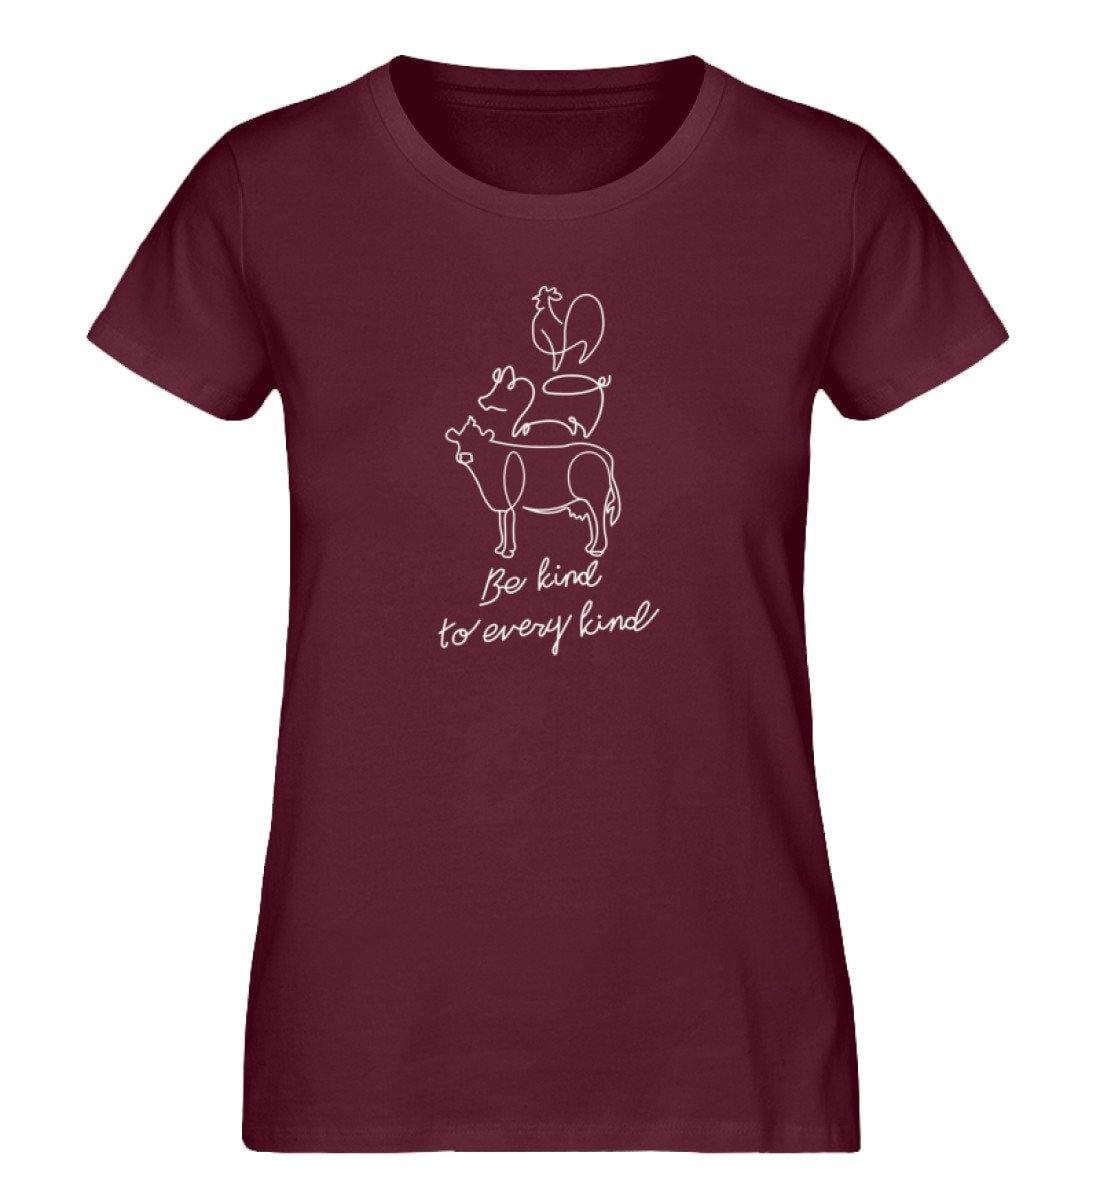 Be Kind To Every Kind - Damen Organic Shirt - Team Vegan © vegan t shirt